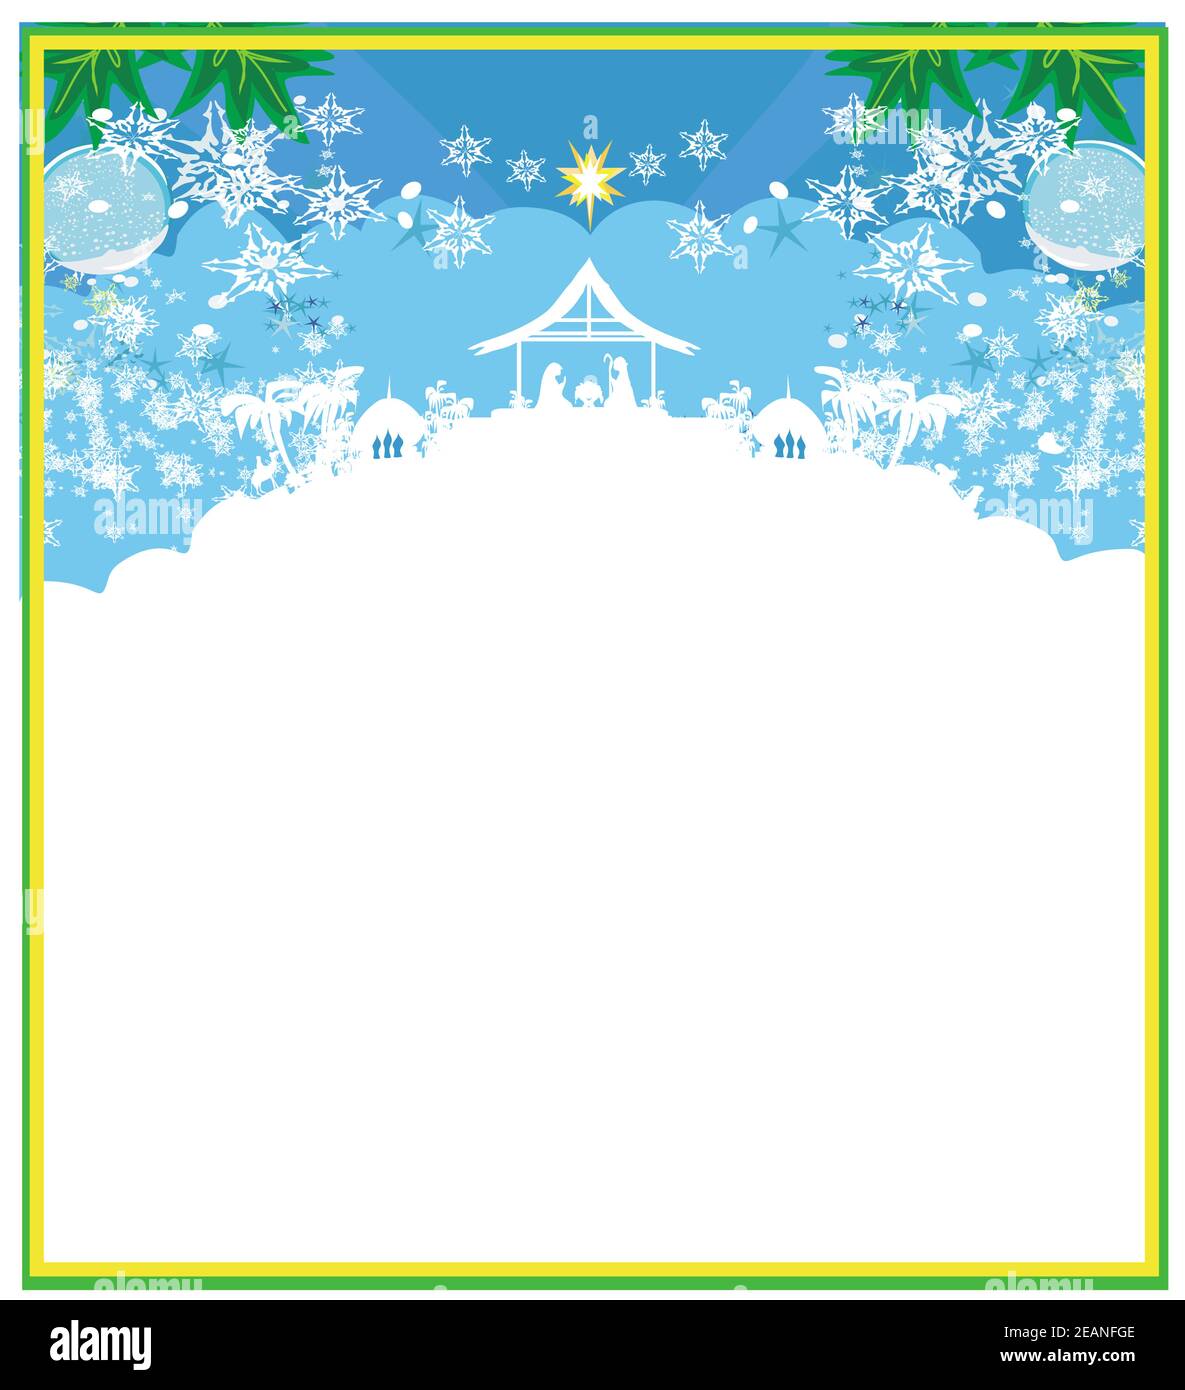 Birth of Jesus in Bethlehem - decorative Christmas card Stock Photo